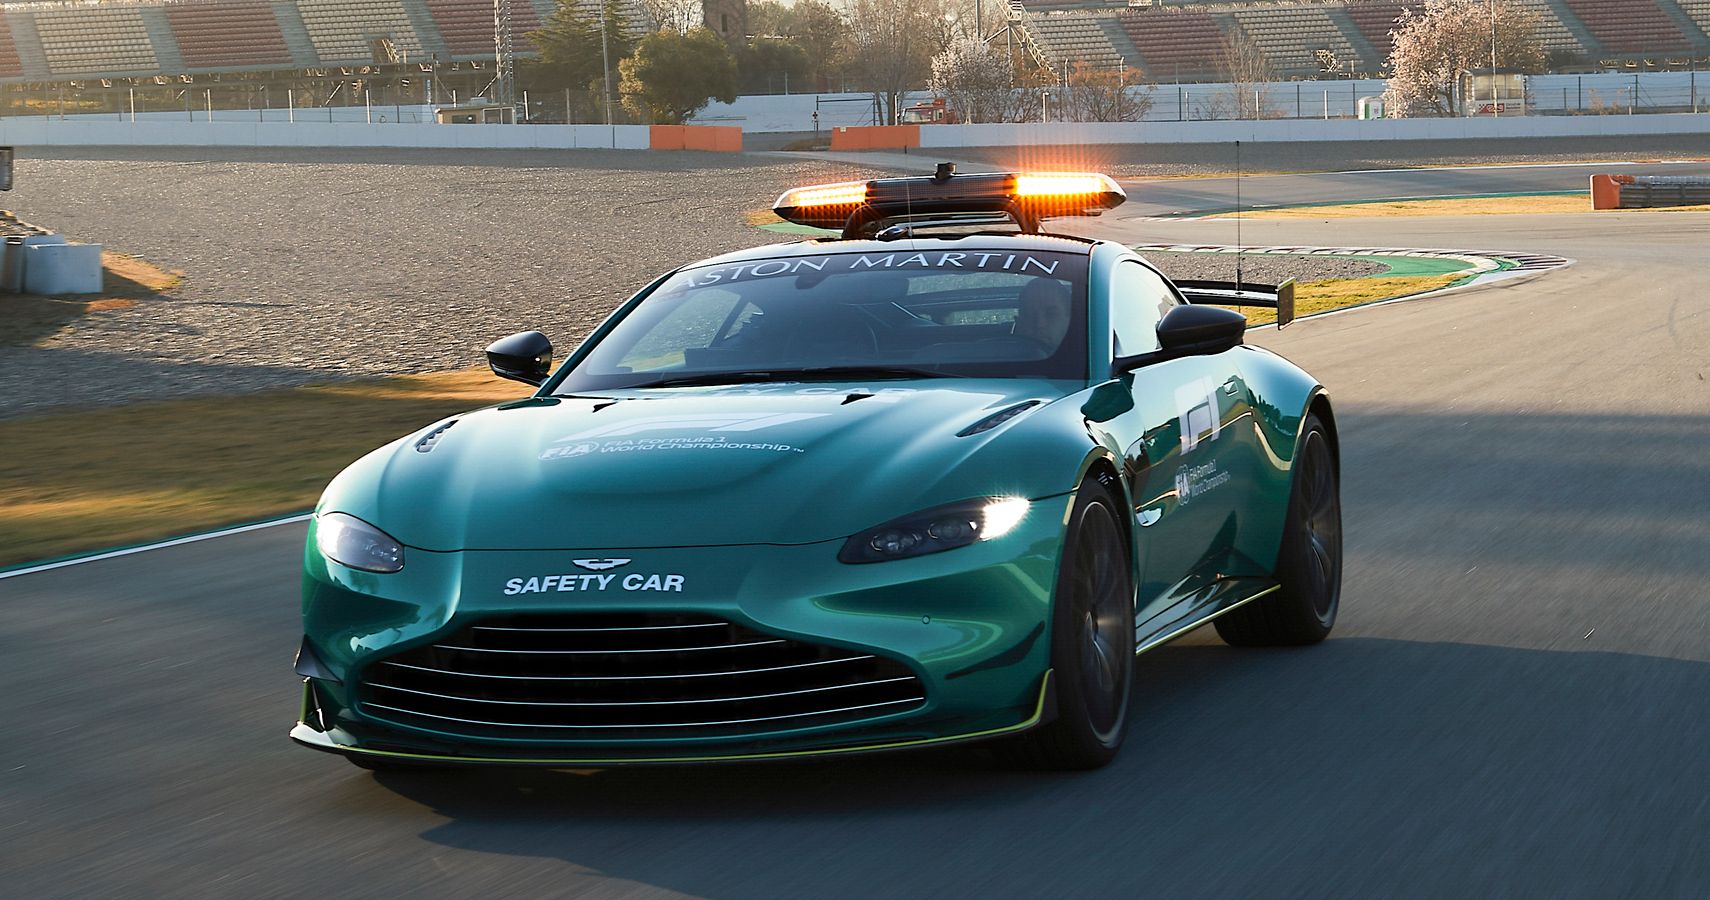 F1 Safety Cars The Aston Martin Vantage V8 And MercedesAMG GT Black